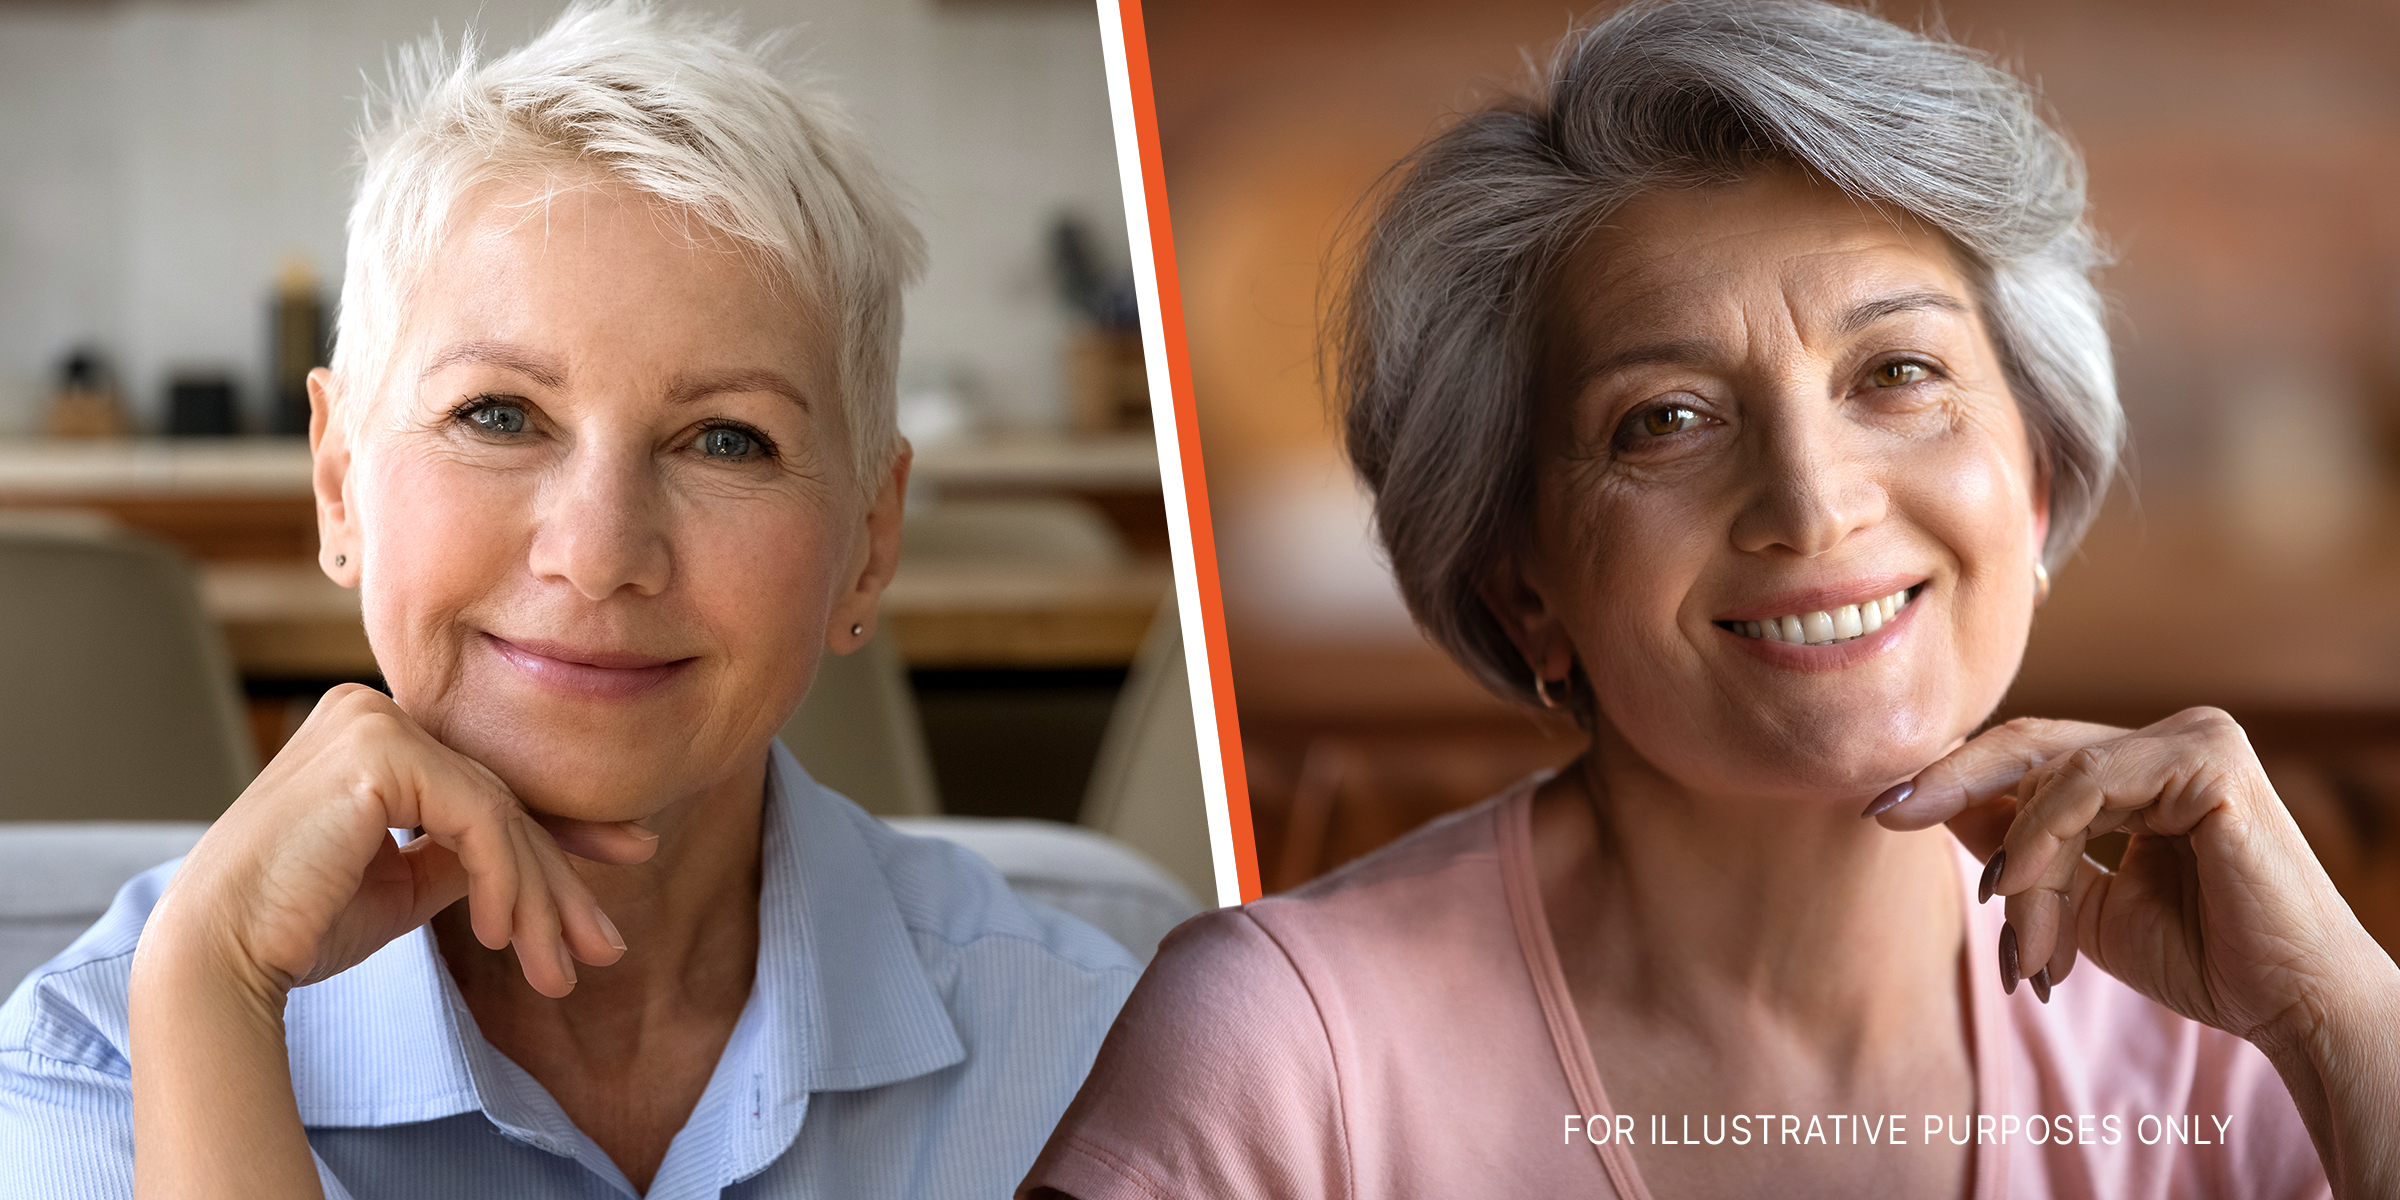 Middle-aged women | Source: Shutterstock